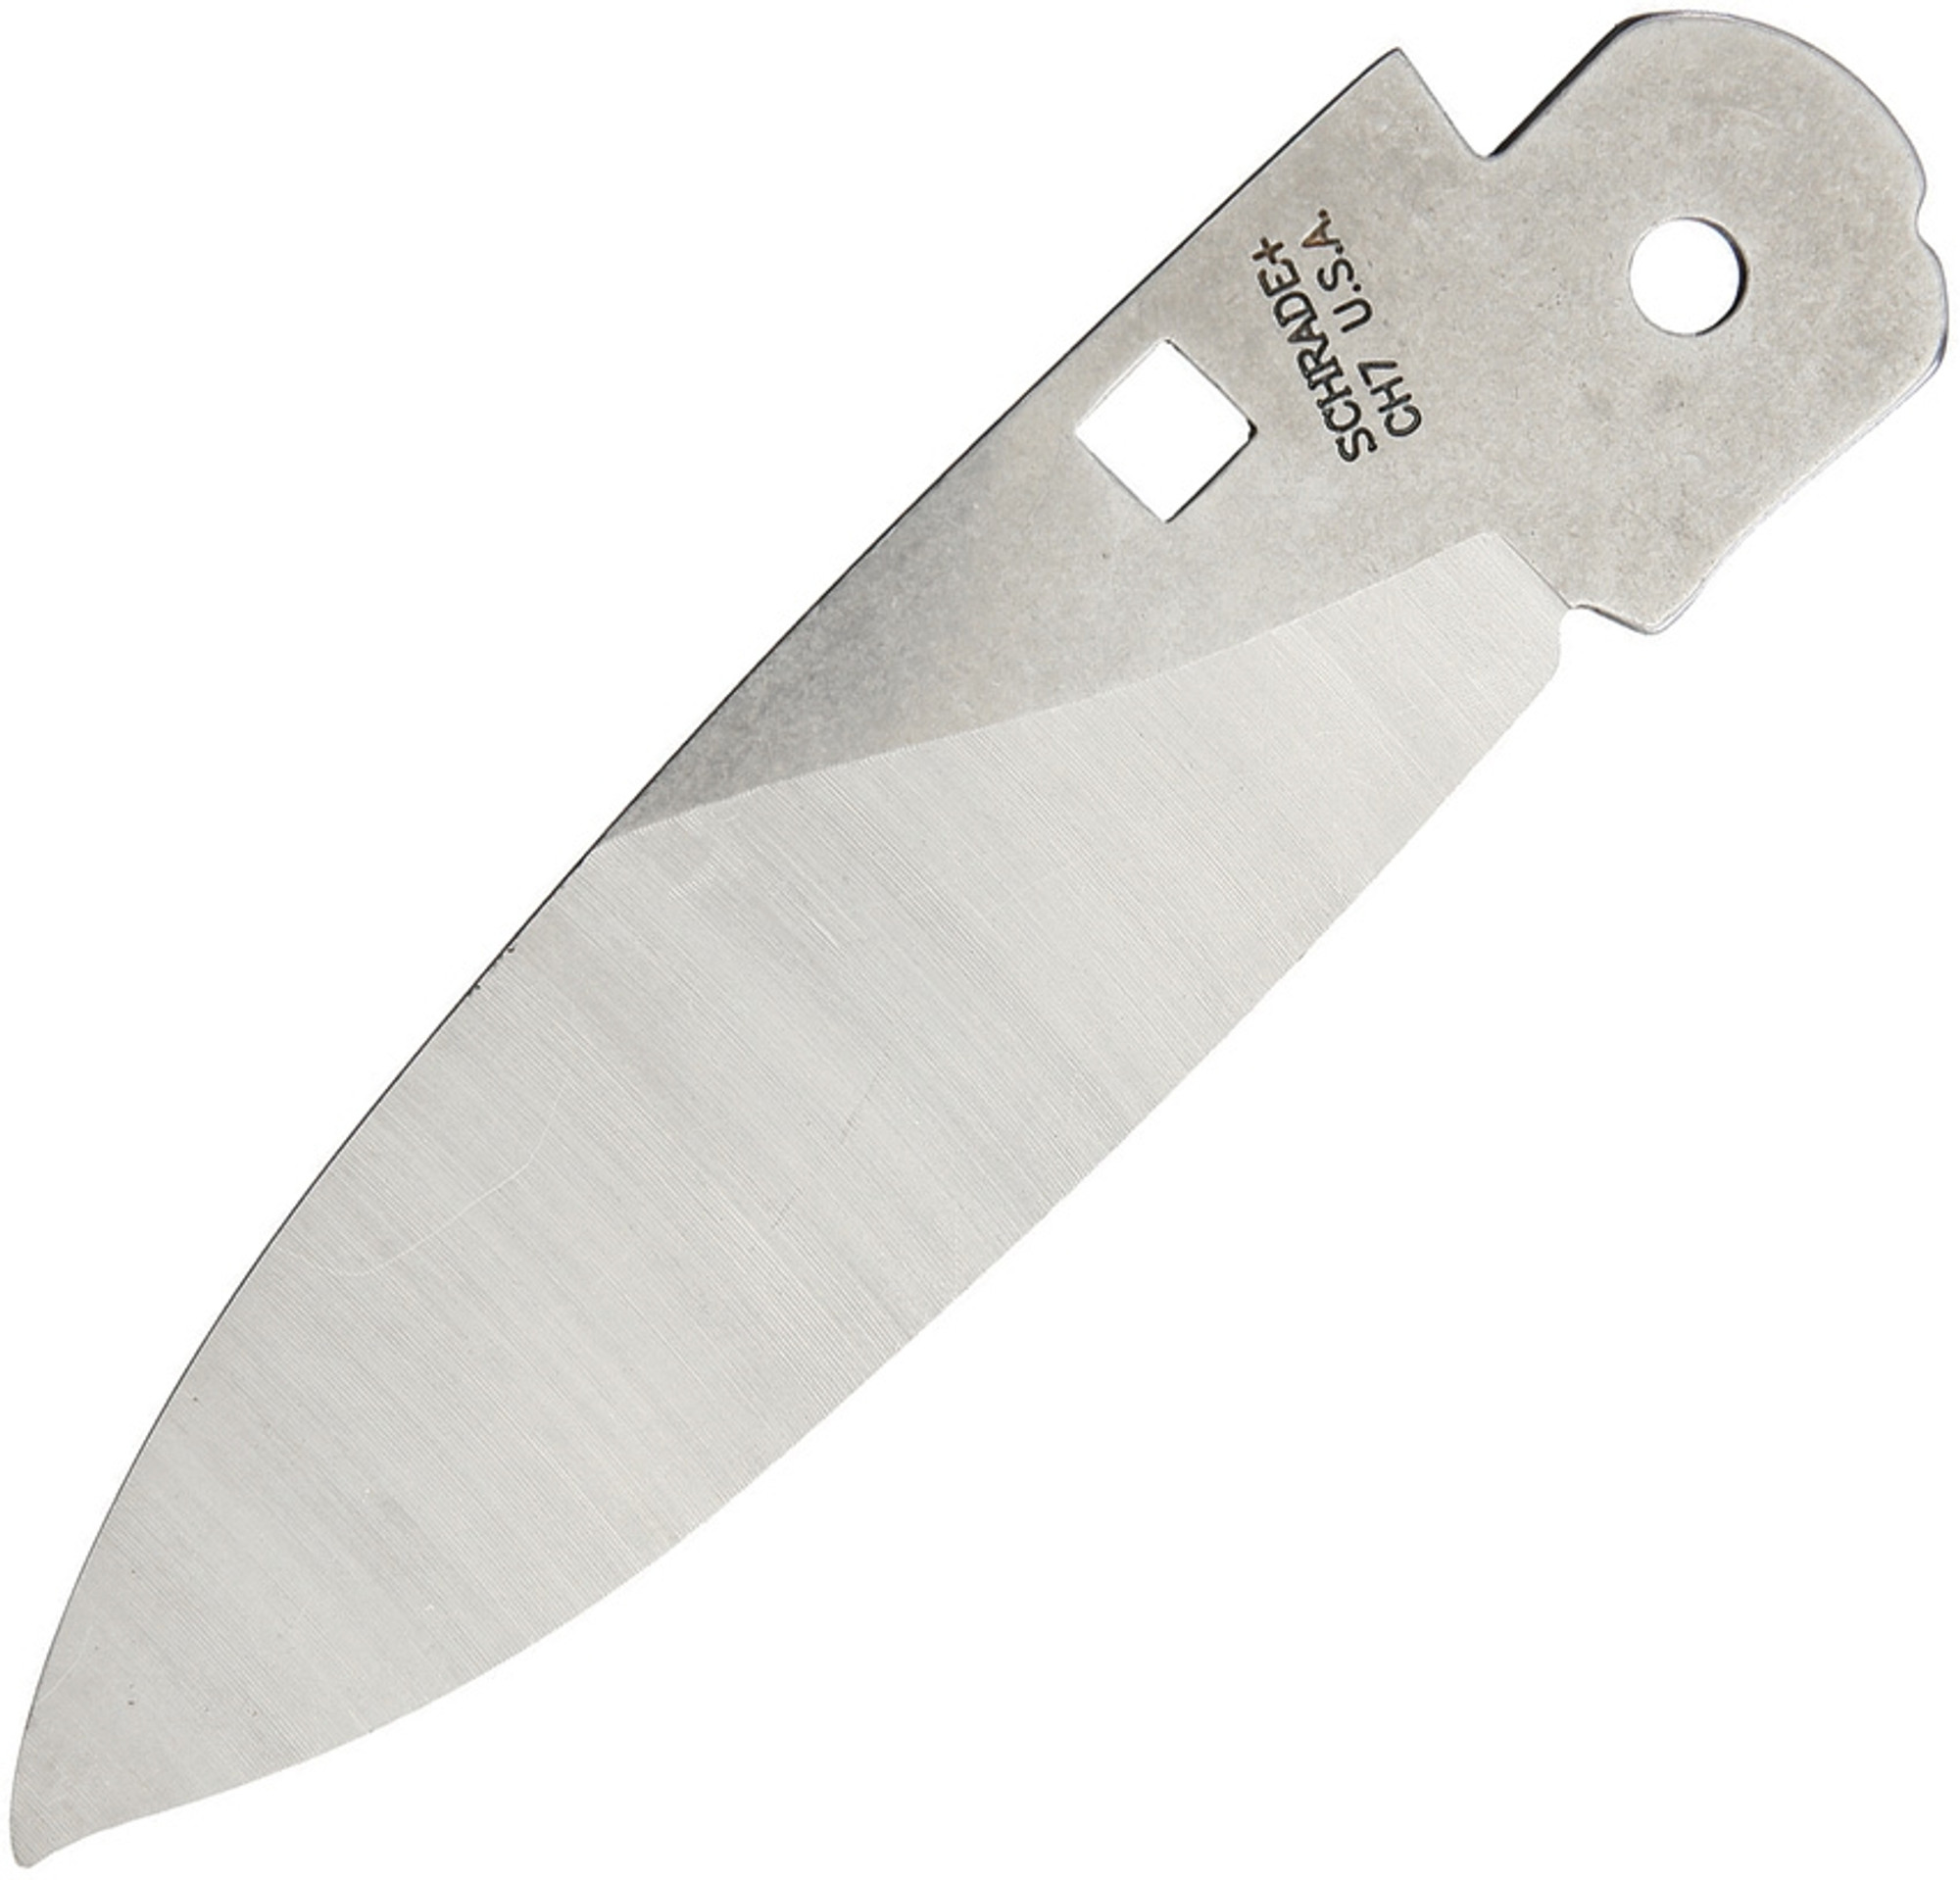 Knife Blade S699